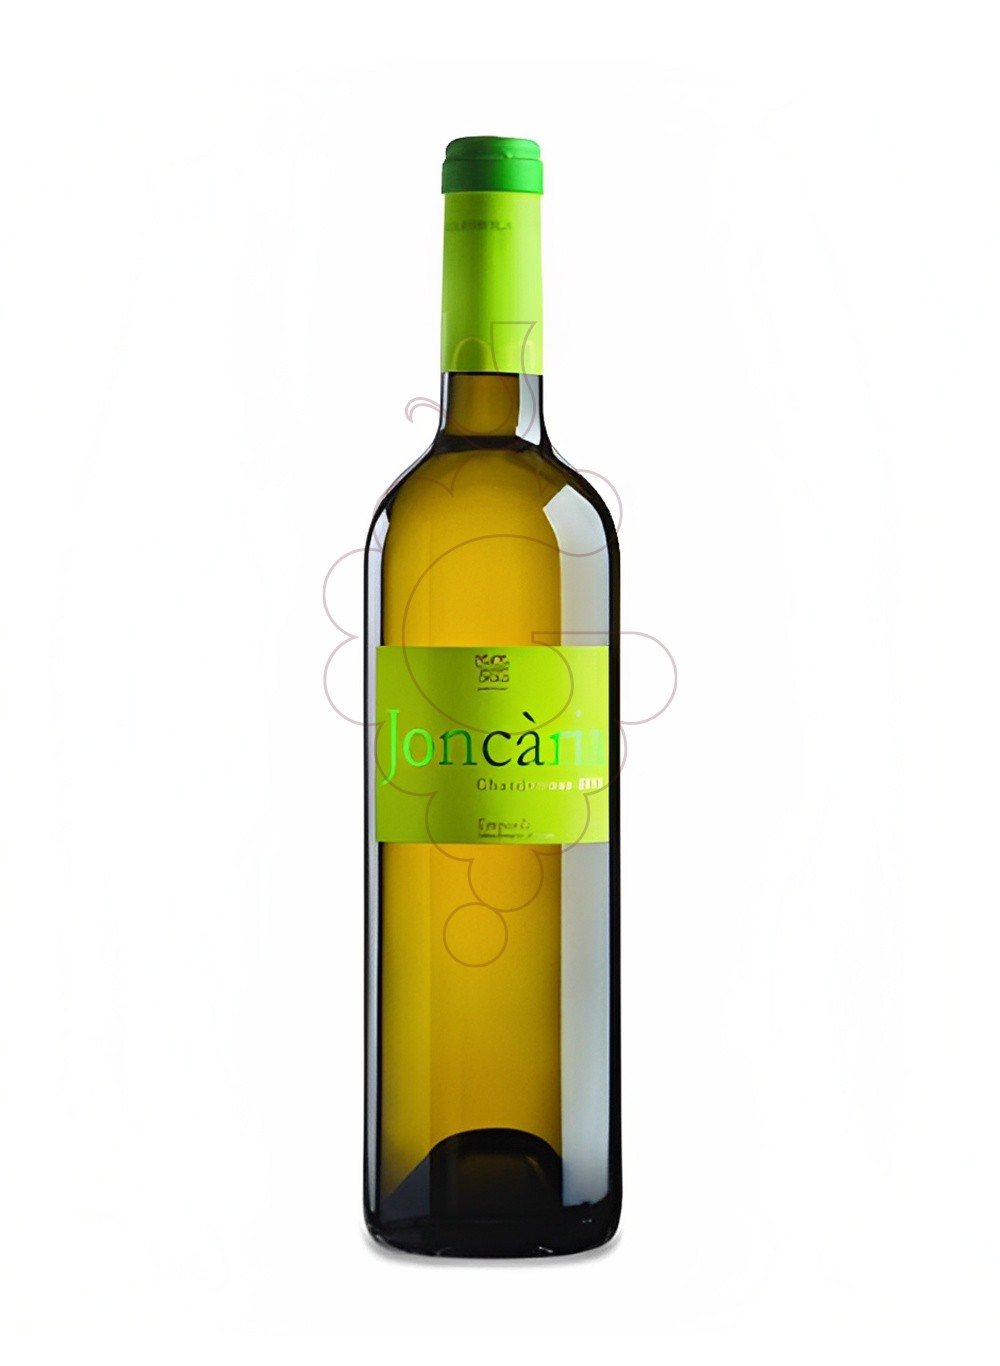 Photo Joncaria blanc chardonnay vin blanc